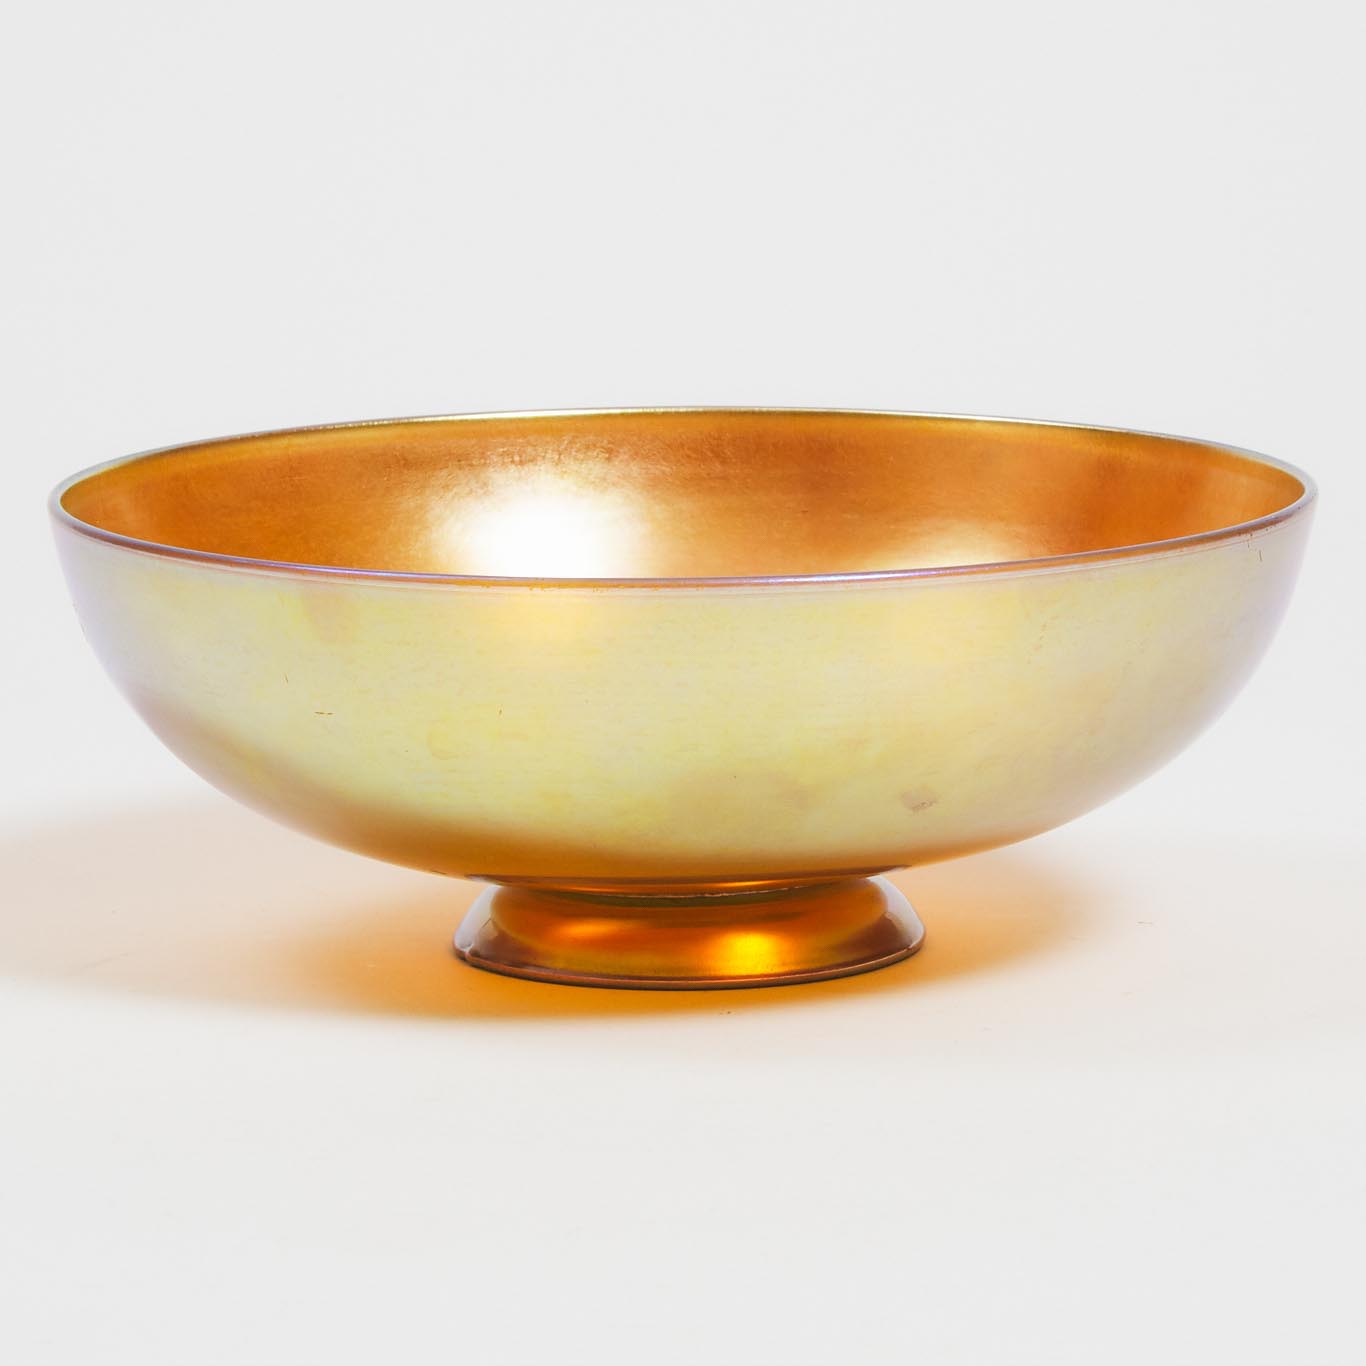 Steuben ‘Aurene’ Iridescent Gold Glass Bowl, early 20th century